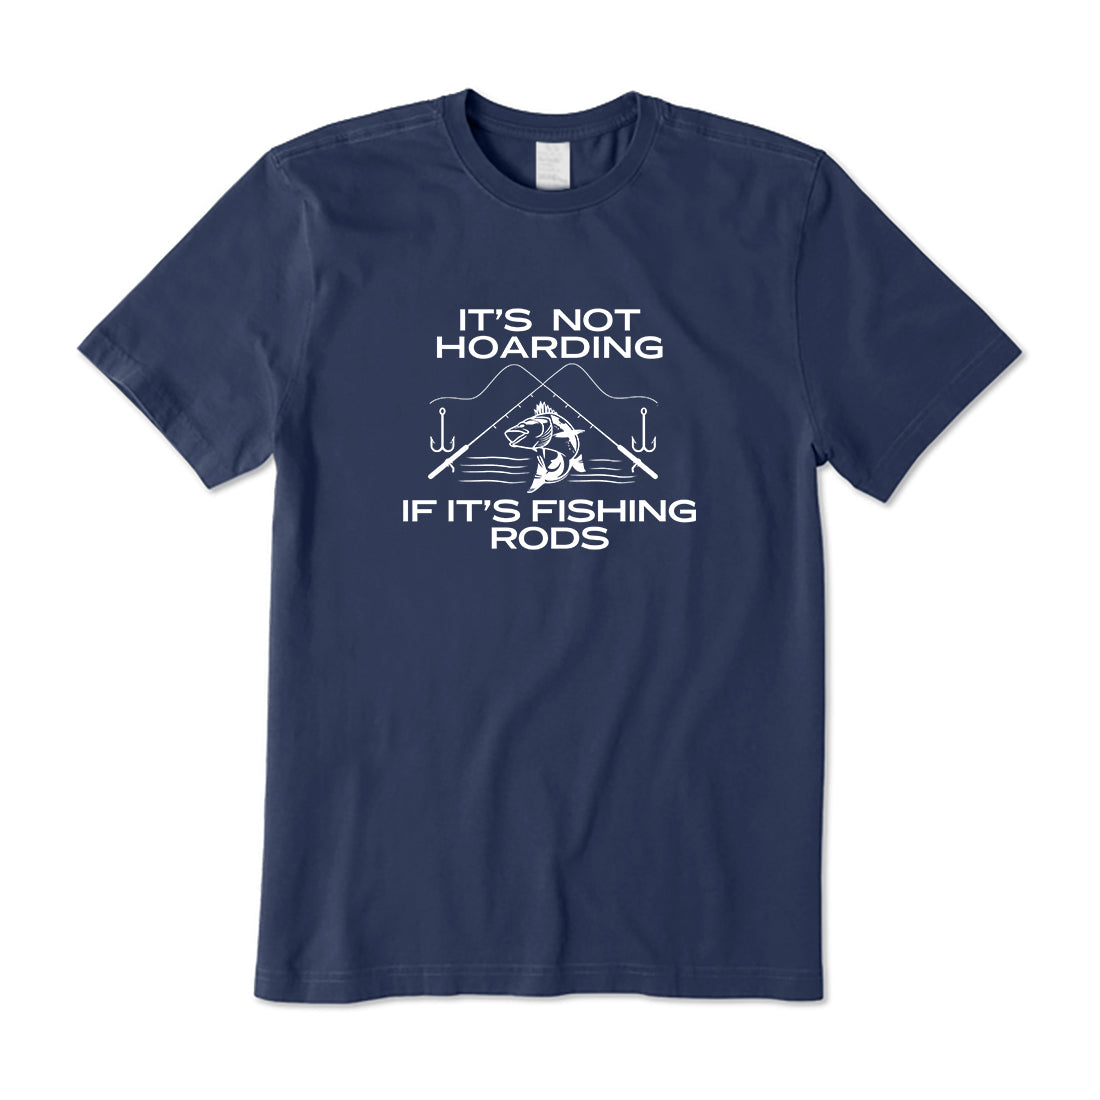 It’s not hoarding if it’s fishing rods T-Shirt